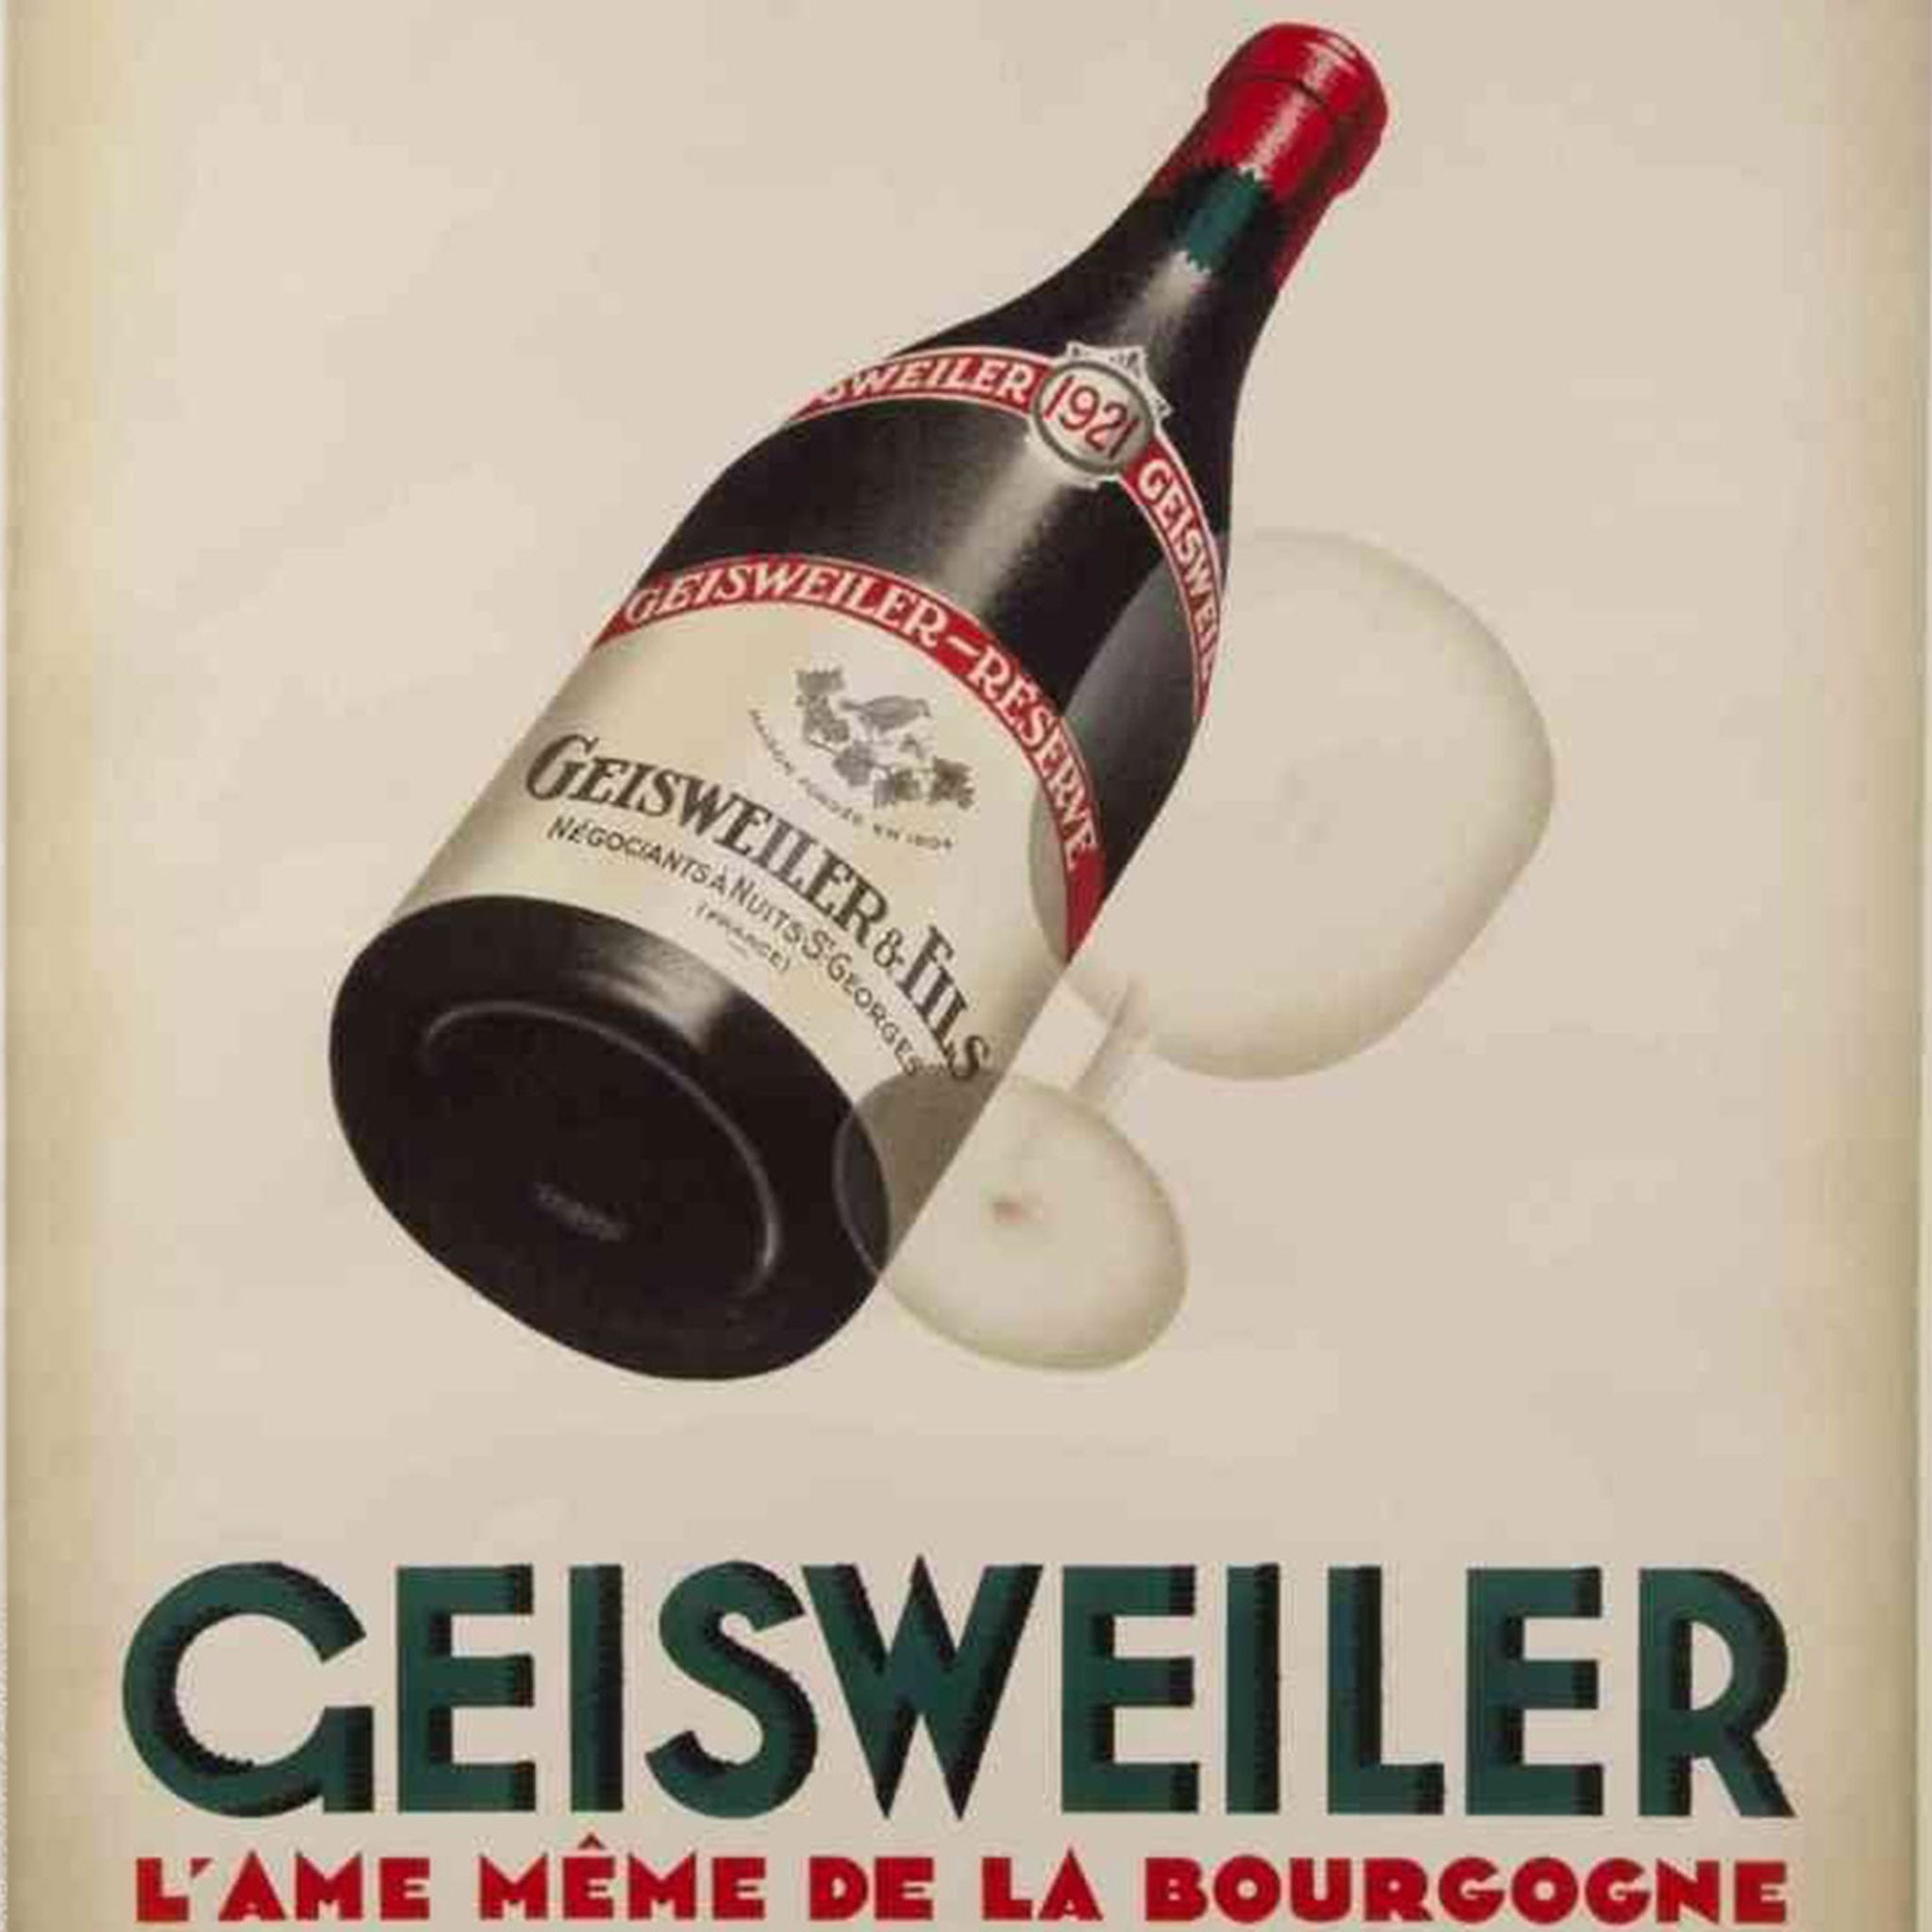 Geisweiler Wine Original Poster